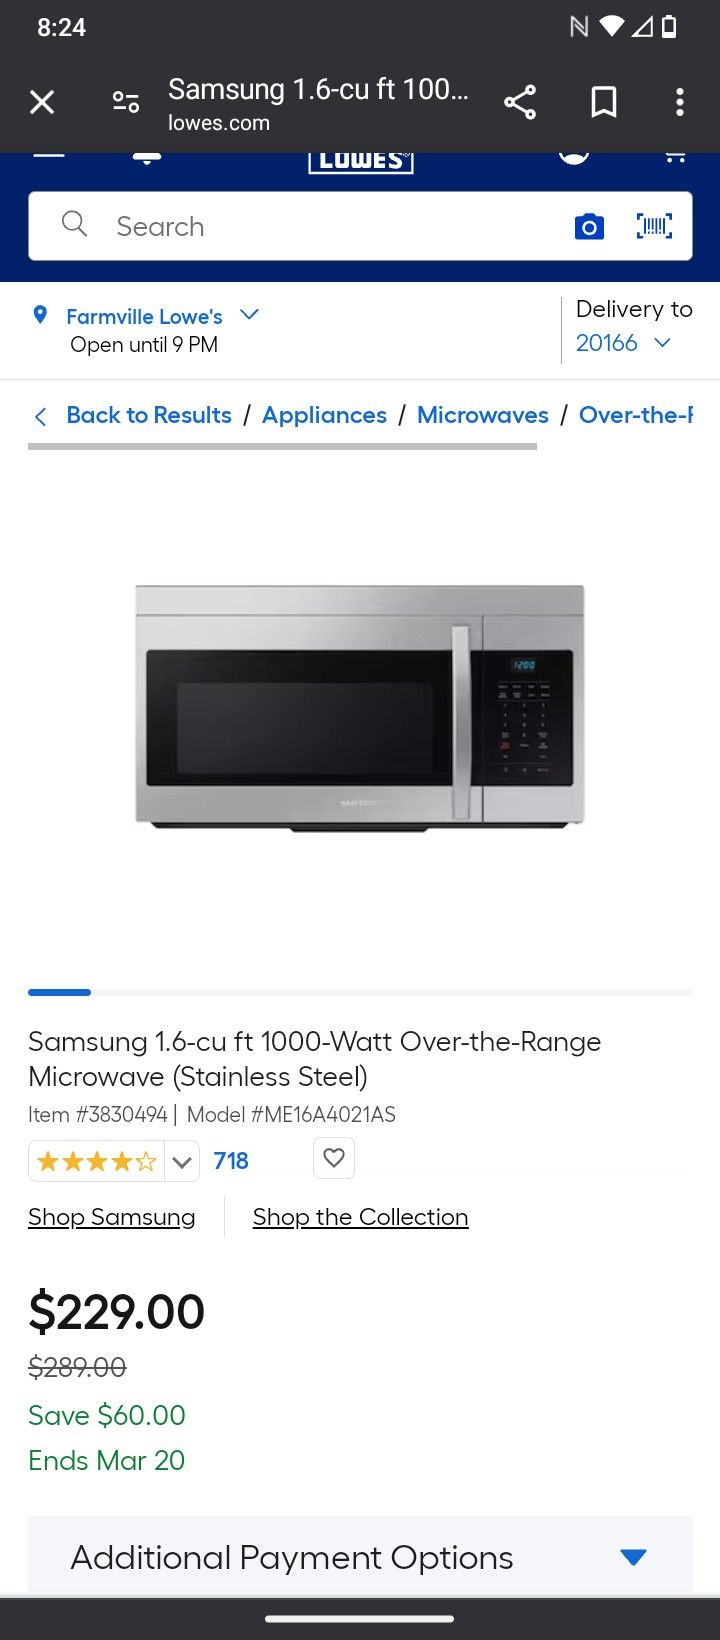 Samsung Over The Range Microwave 